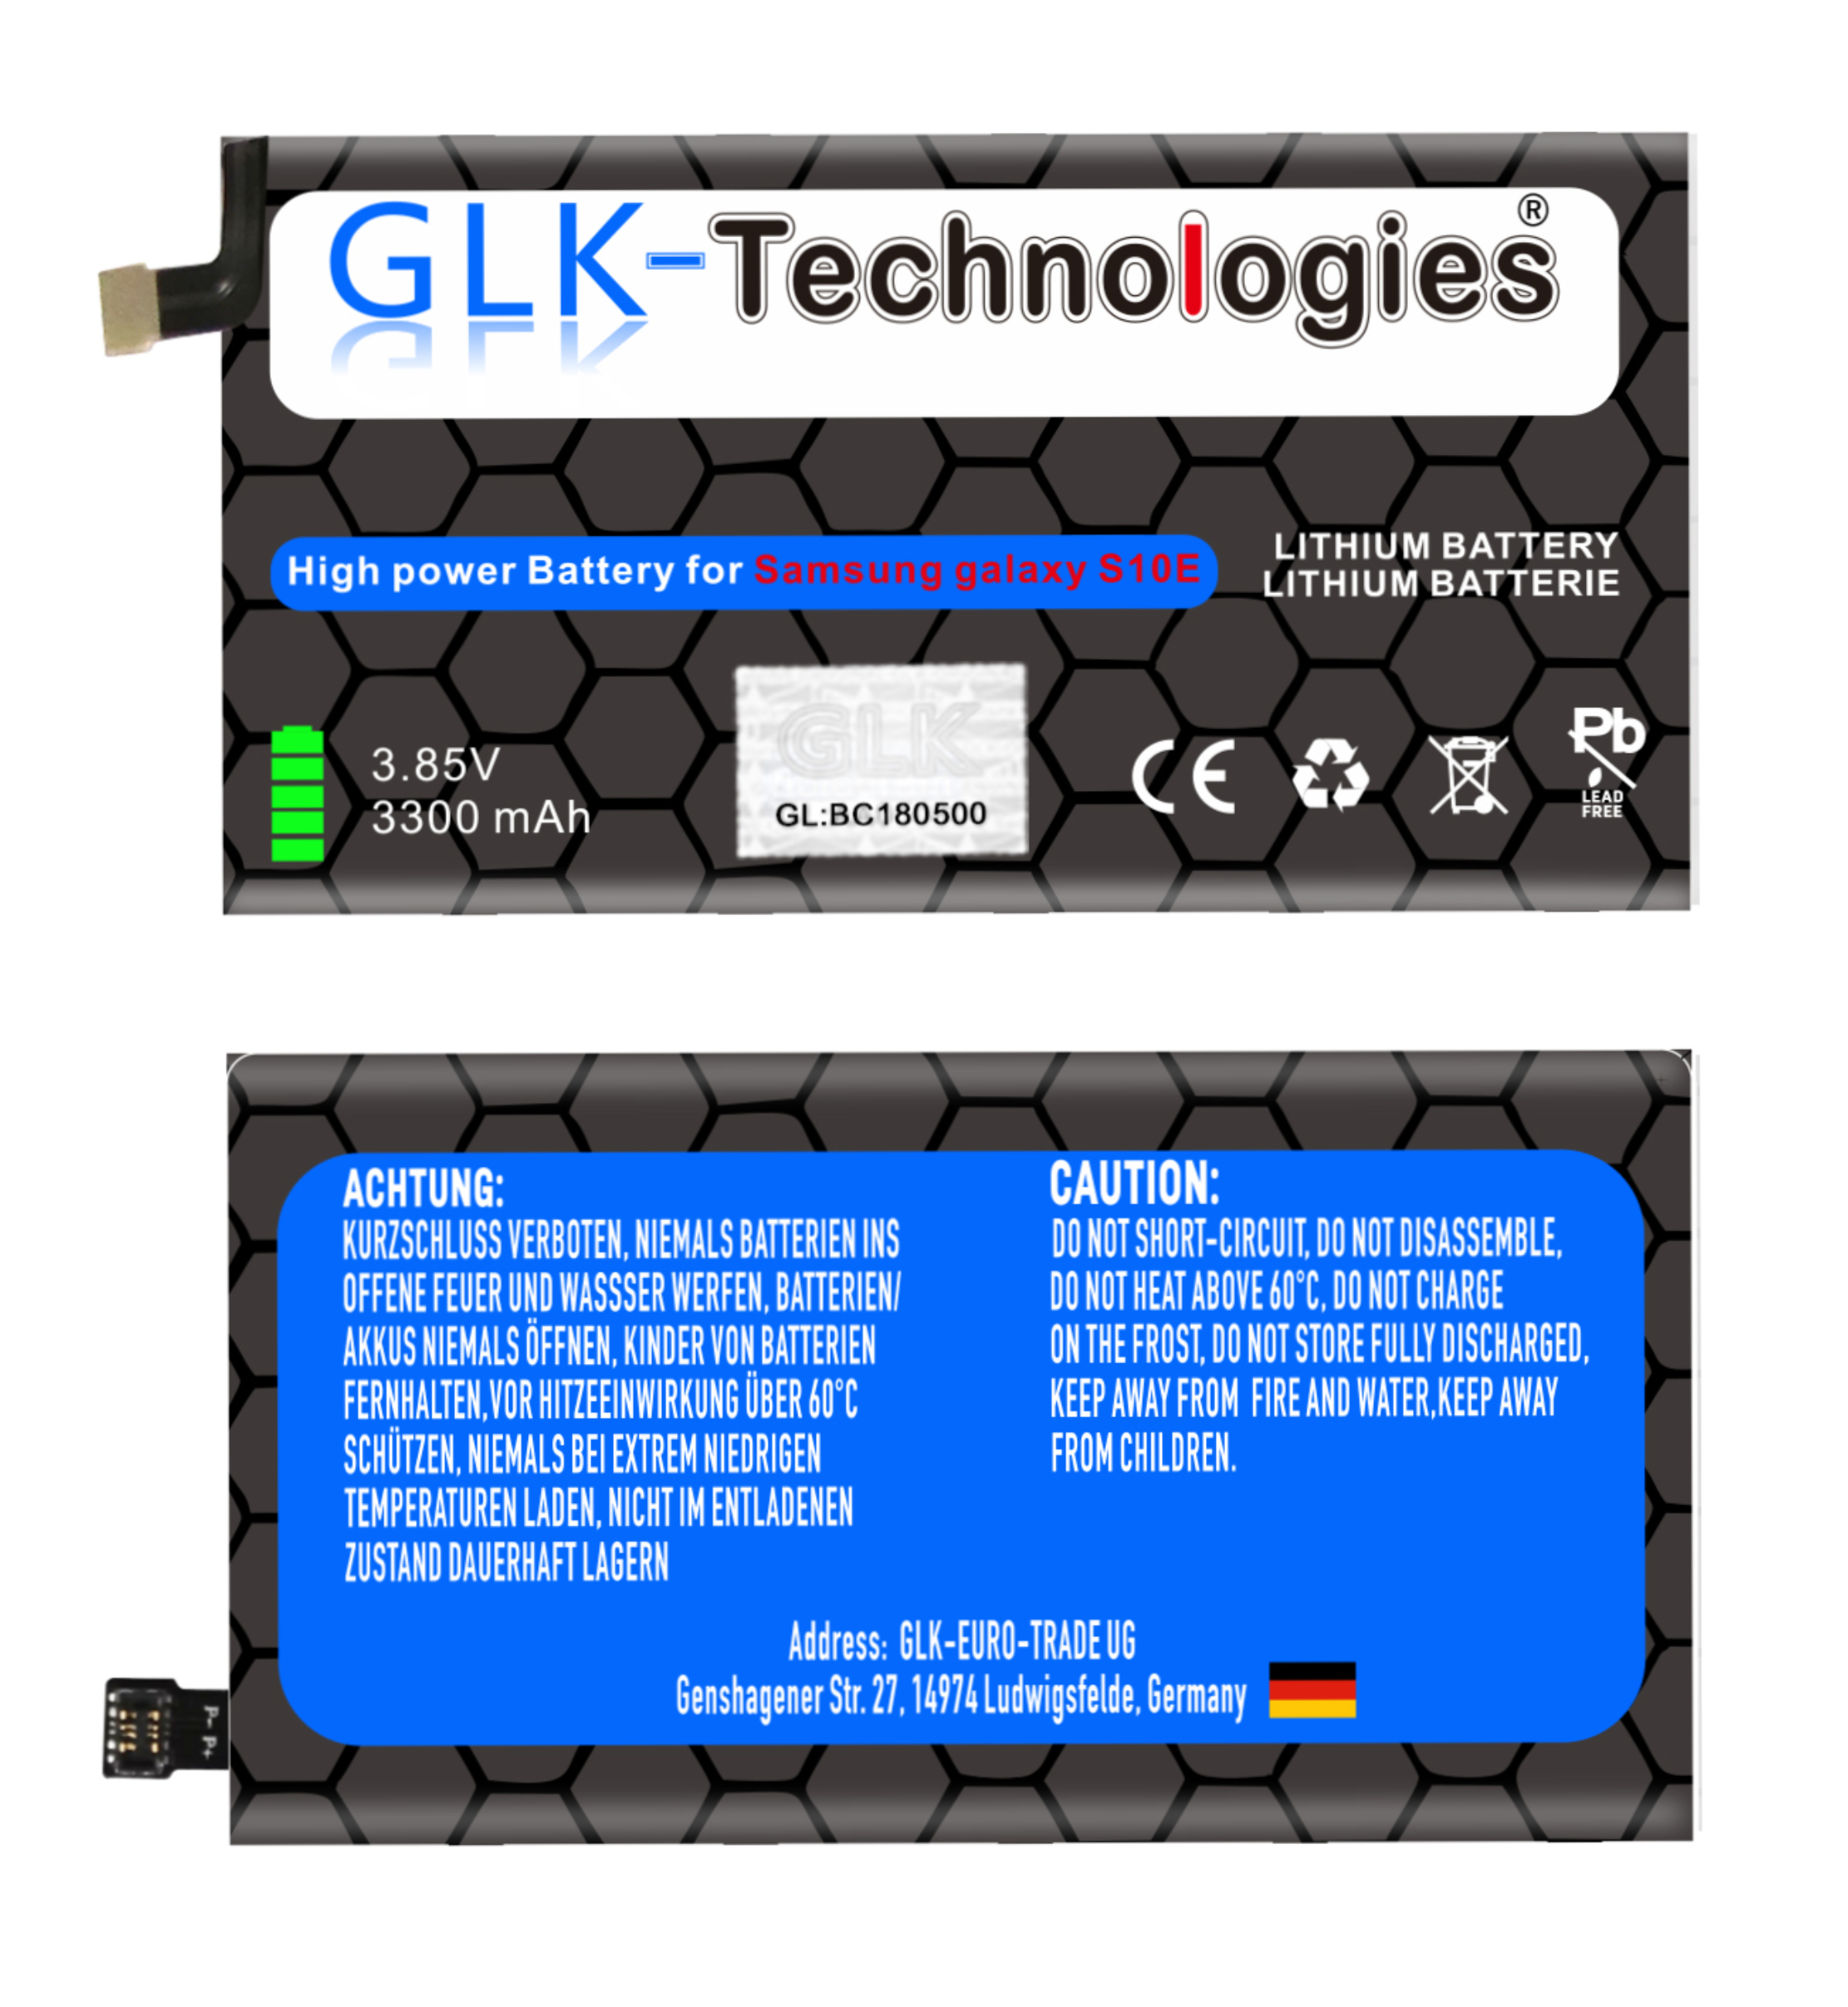 GLK-TECHNOLOGIES Ersatz Akku für Samsung mAh Akku, 3300 3.85 Smartphone mAh G970F 3300 GLK-S10E Li-Ion, Galaxy S10e Volt